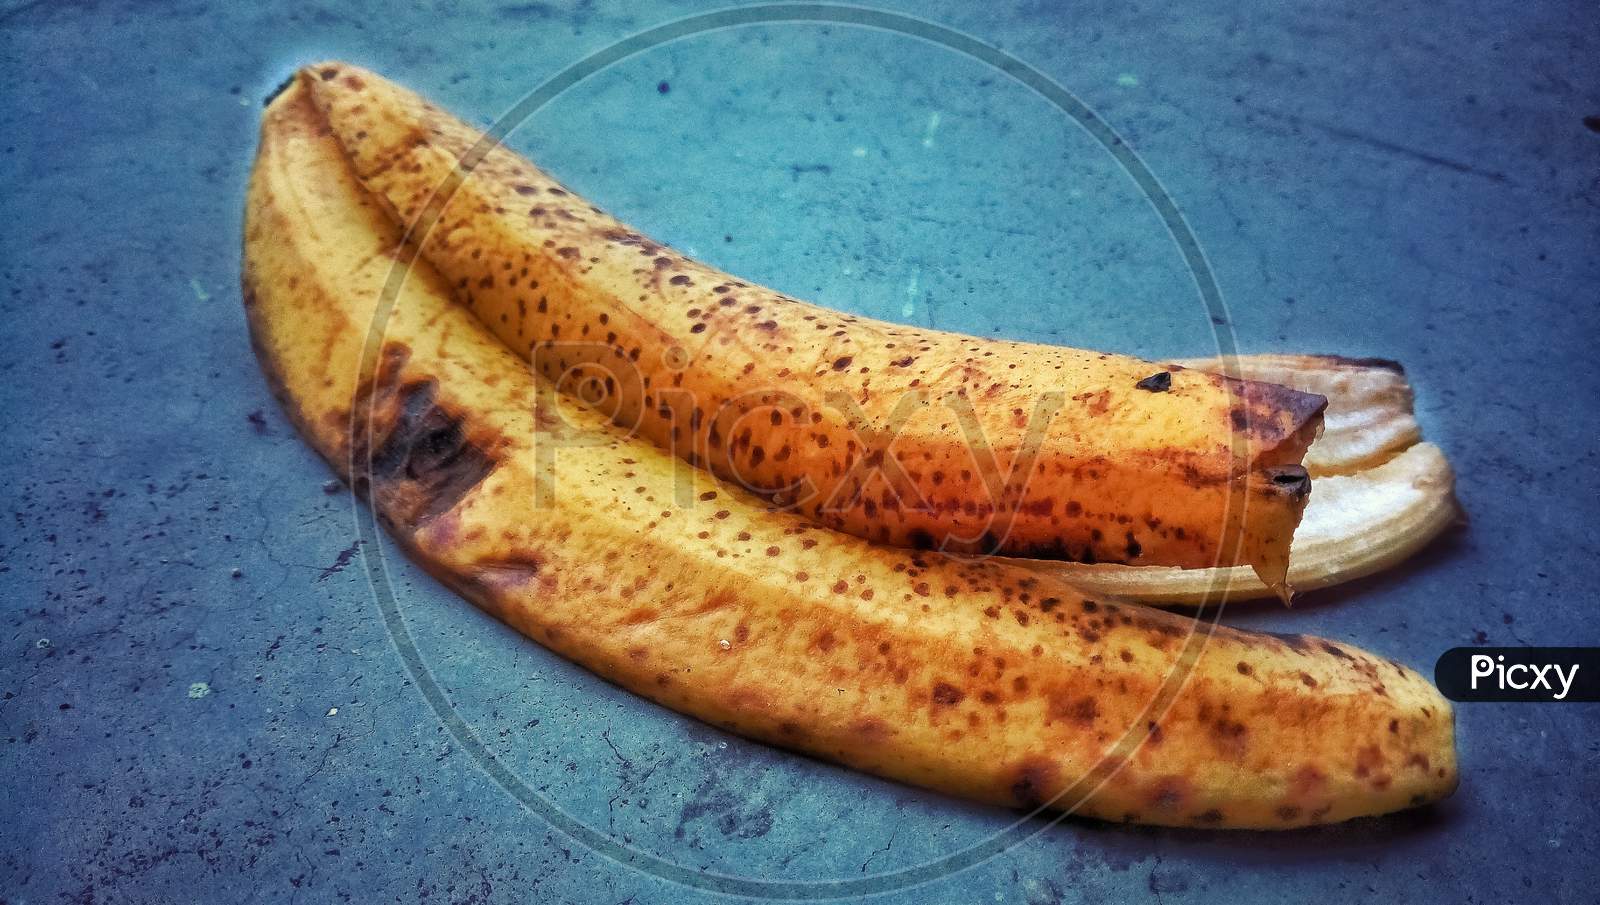 Banana peel picture yellow